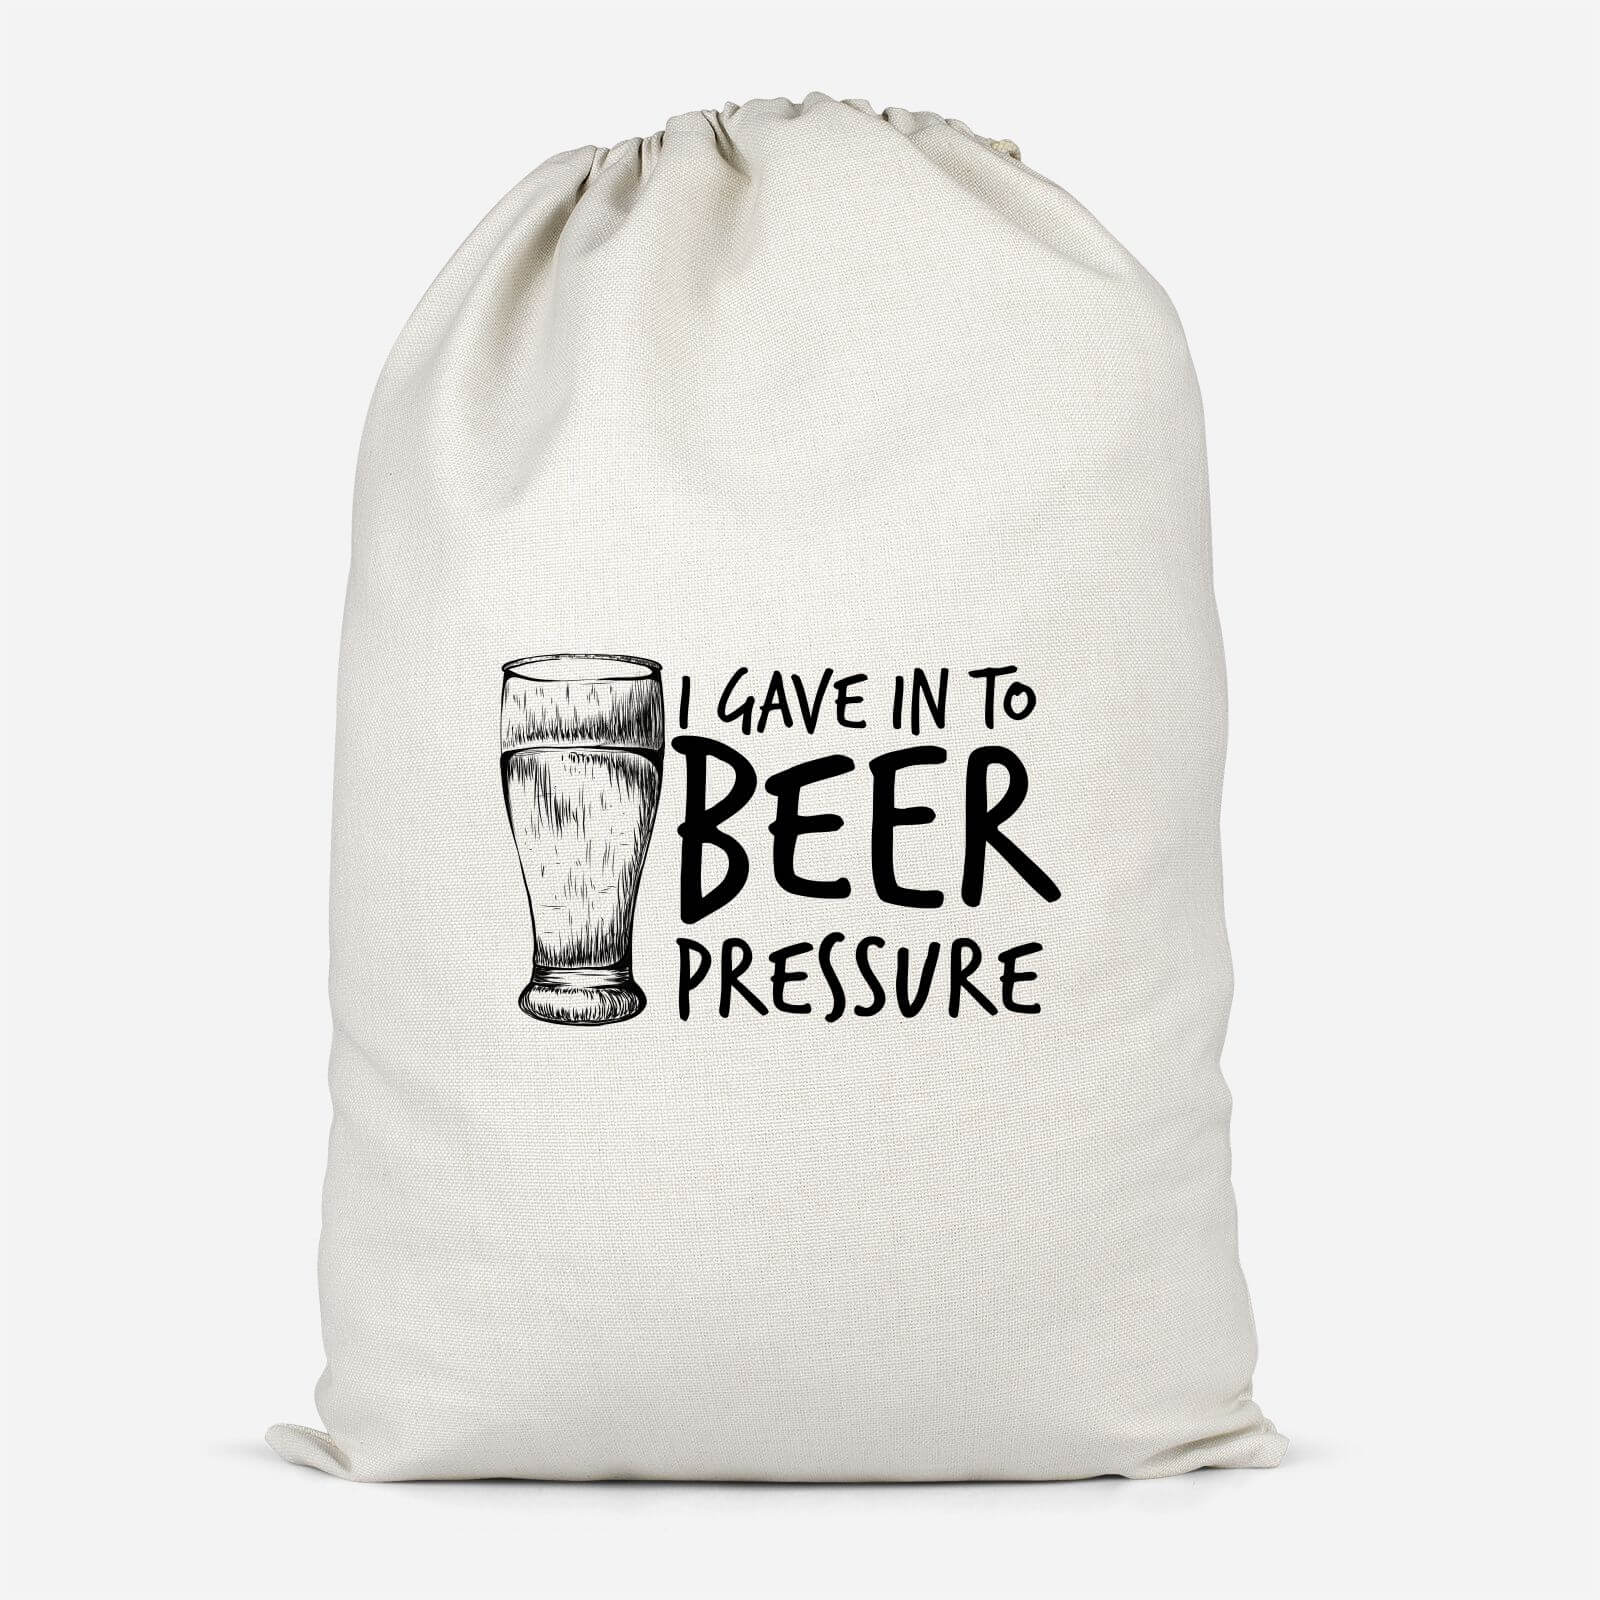 Beer Pressure Cotton Storage Bag - Small